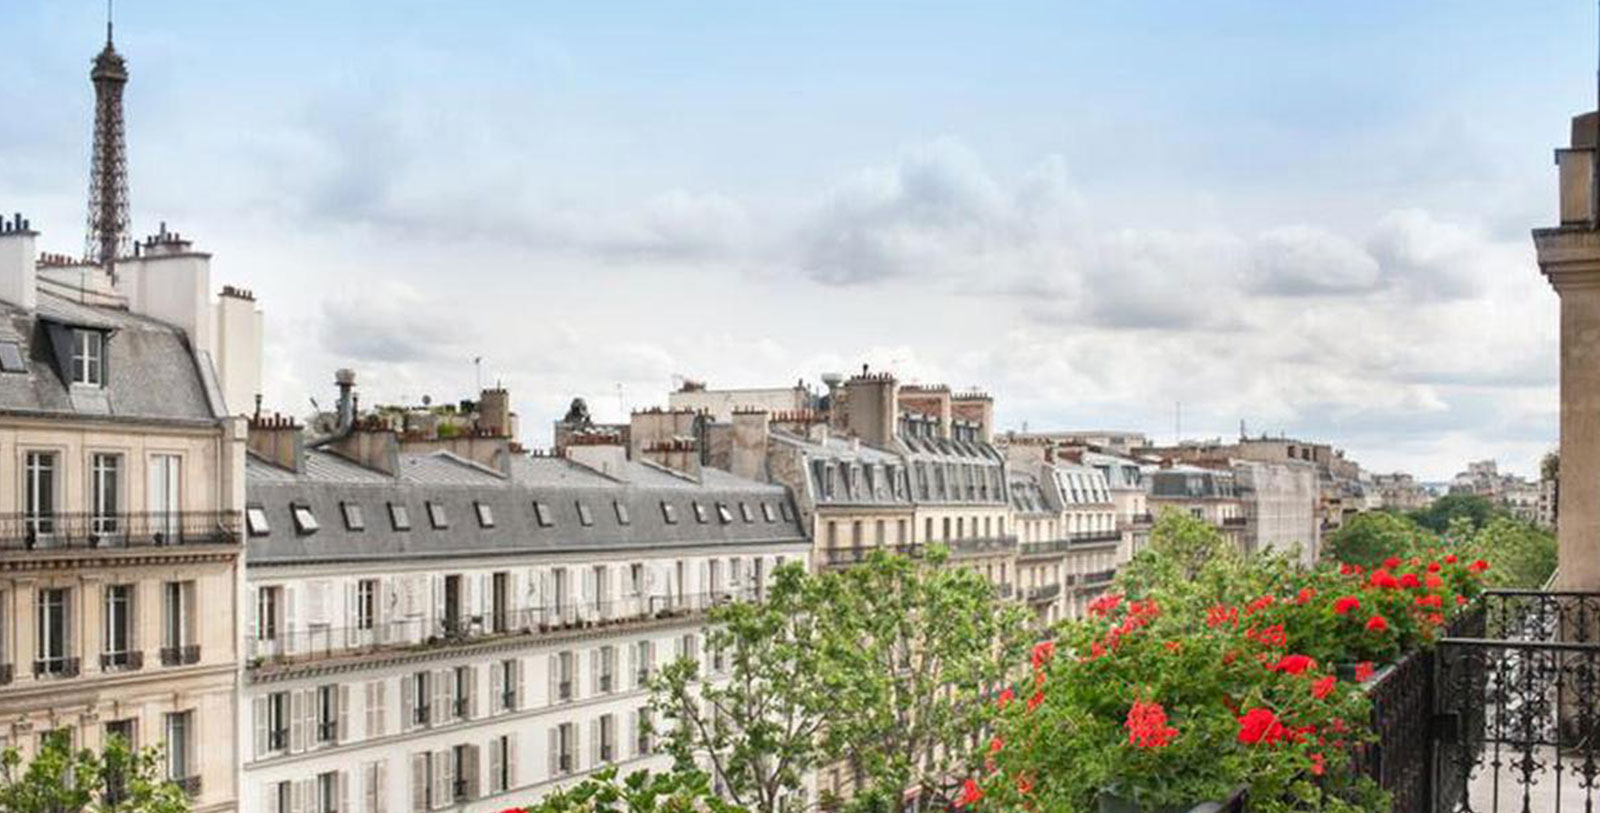 Experience the Eiffel Tower, the Palais de Chaillot, and the Jardins du Trocadéro several blocks away.